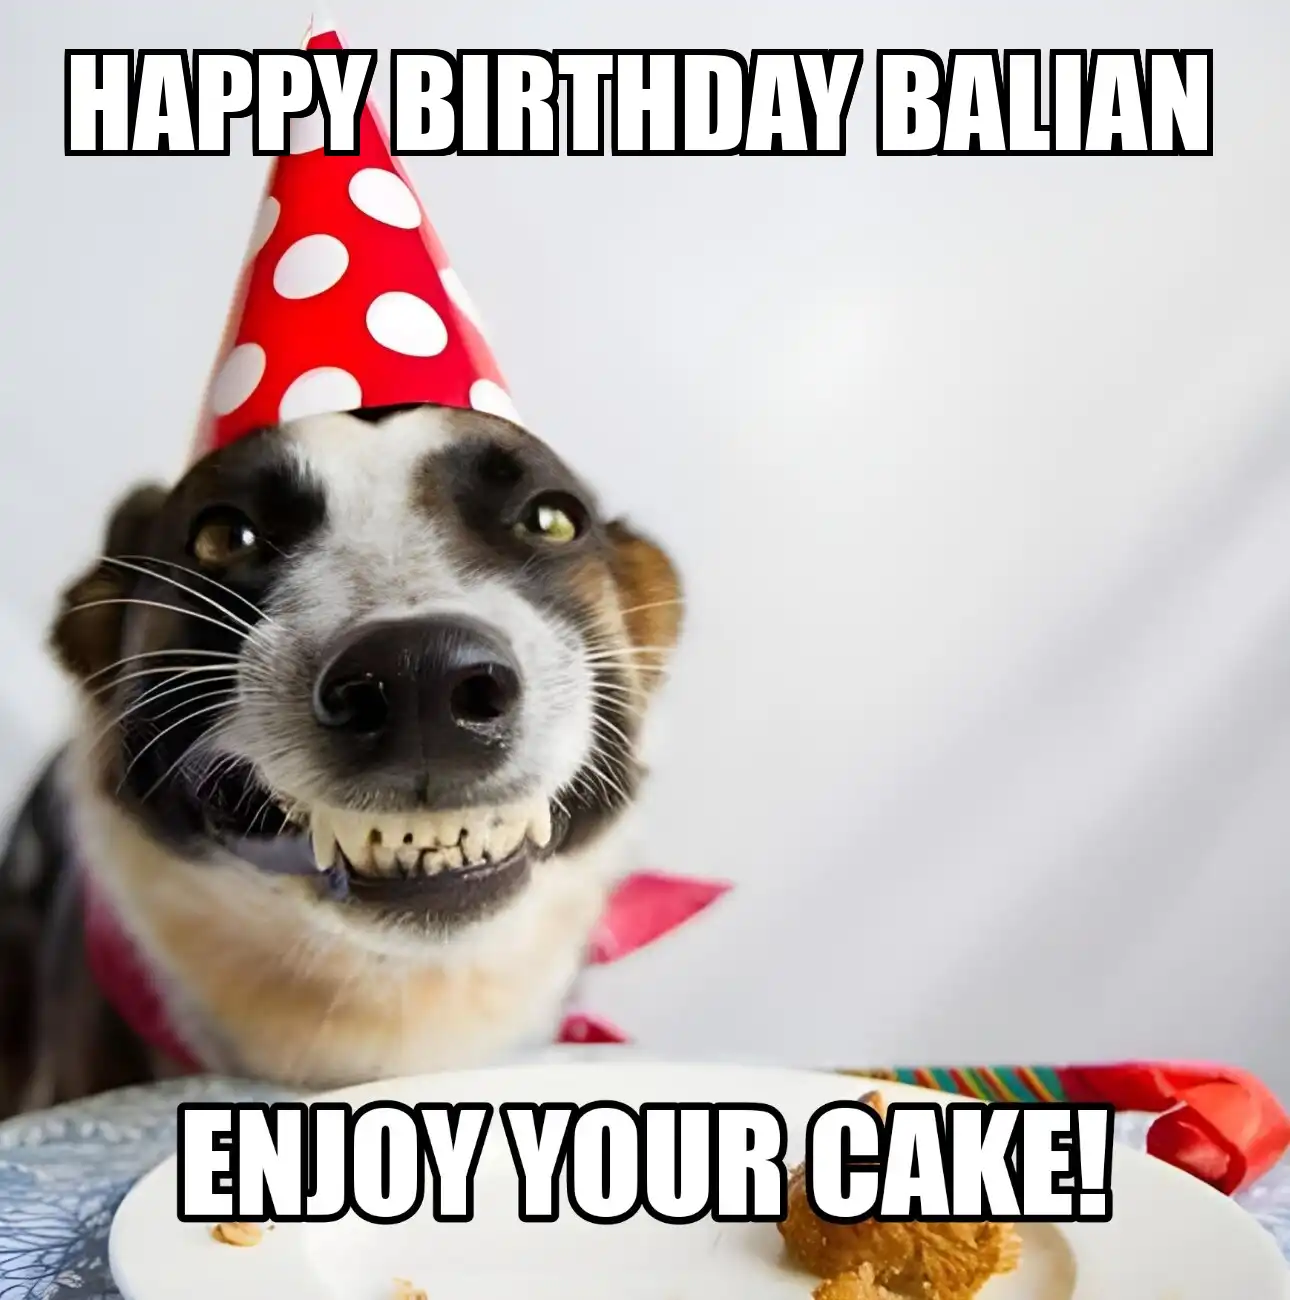 Happy Birthday Balian Enjoy Your Cake Dog Meme